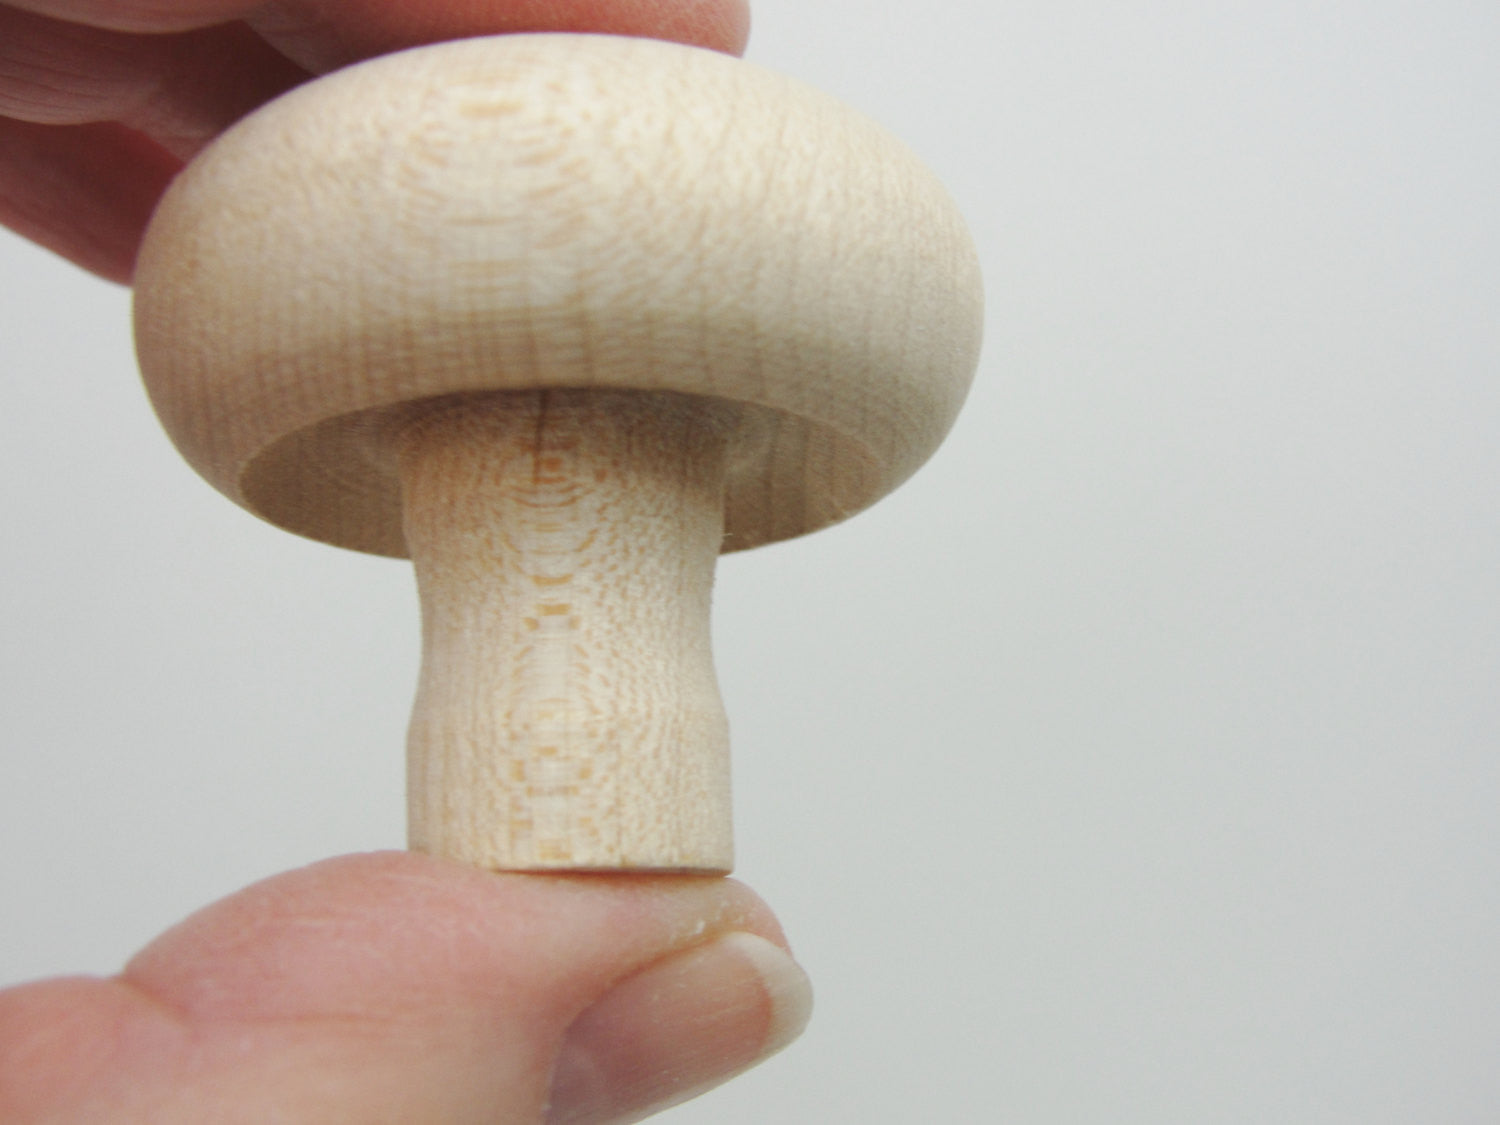 Kitchen Craft Wooden Handled Mushroom Brush- Boxed